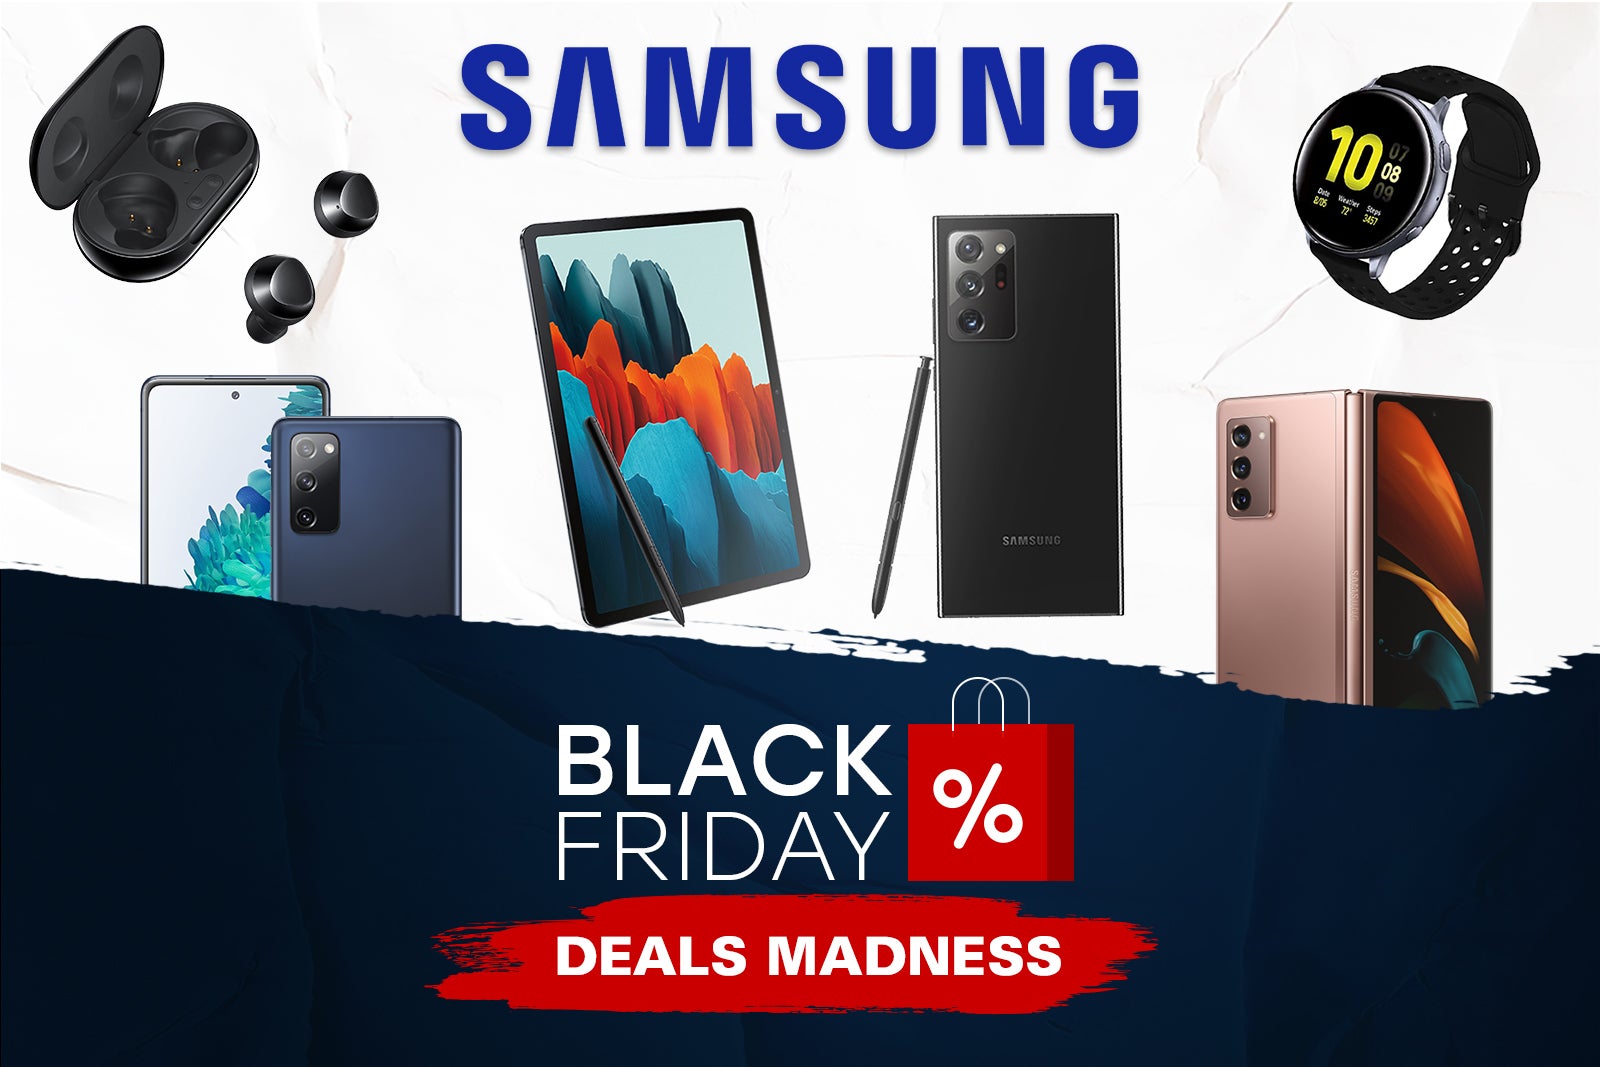 Black Friday discounts are still going strong at Samsung major savings